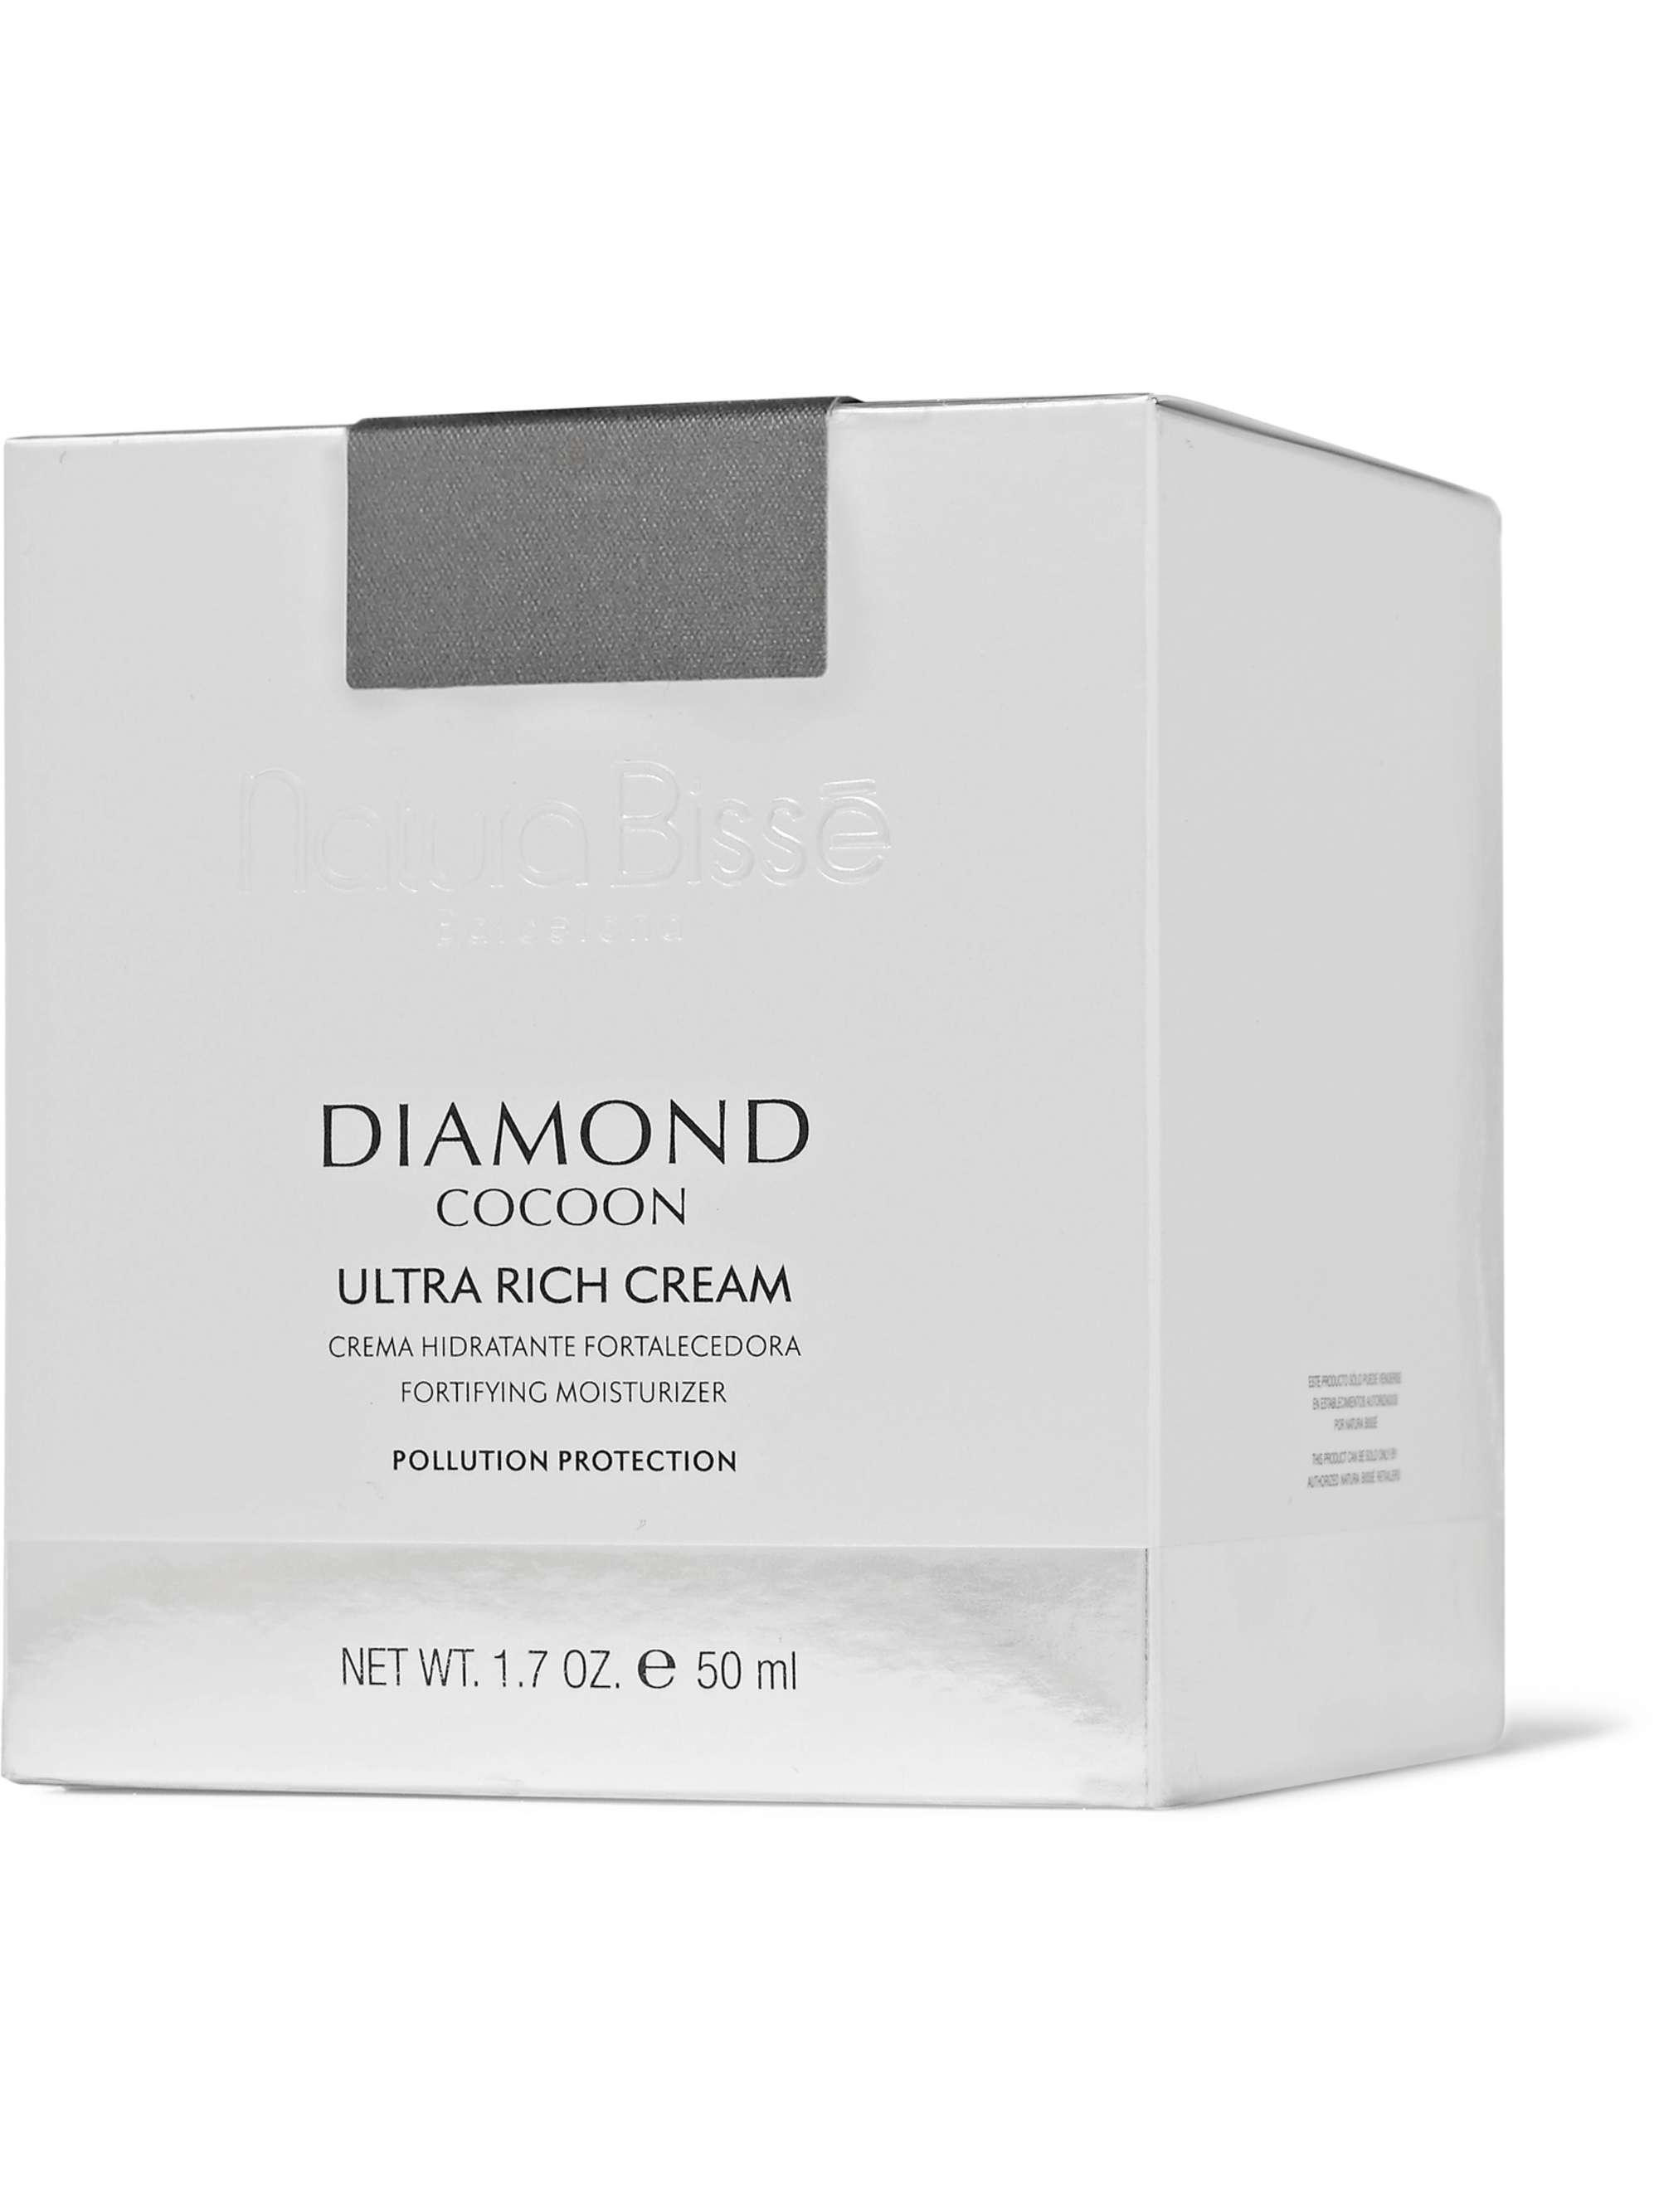 NATURA BISSÉ Diamond Cocoon Ultra Rich Cream, 50ml